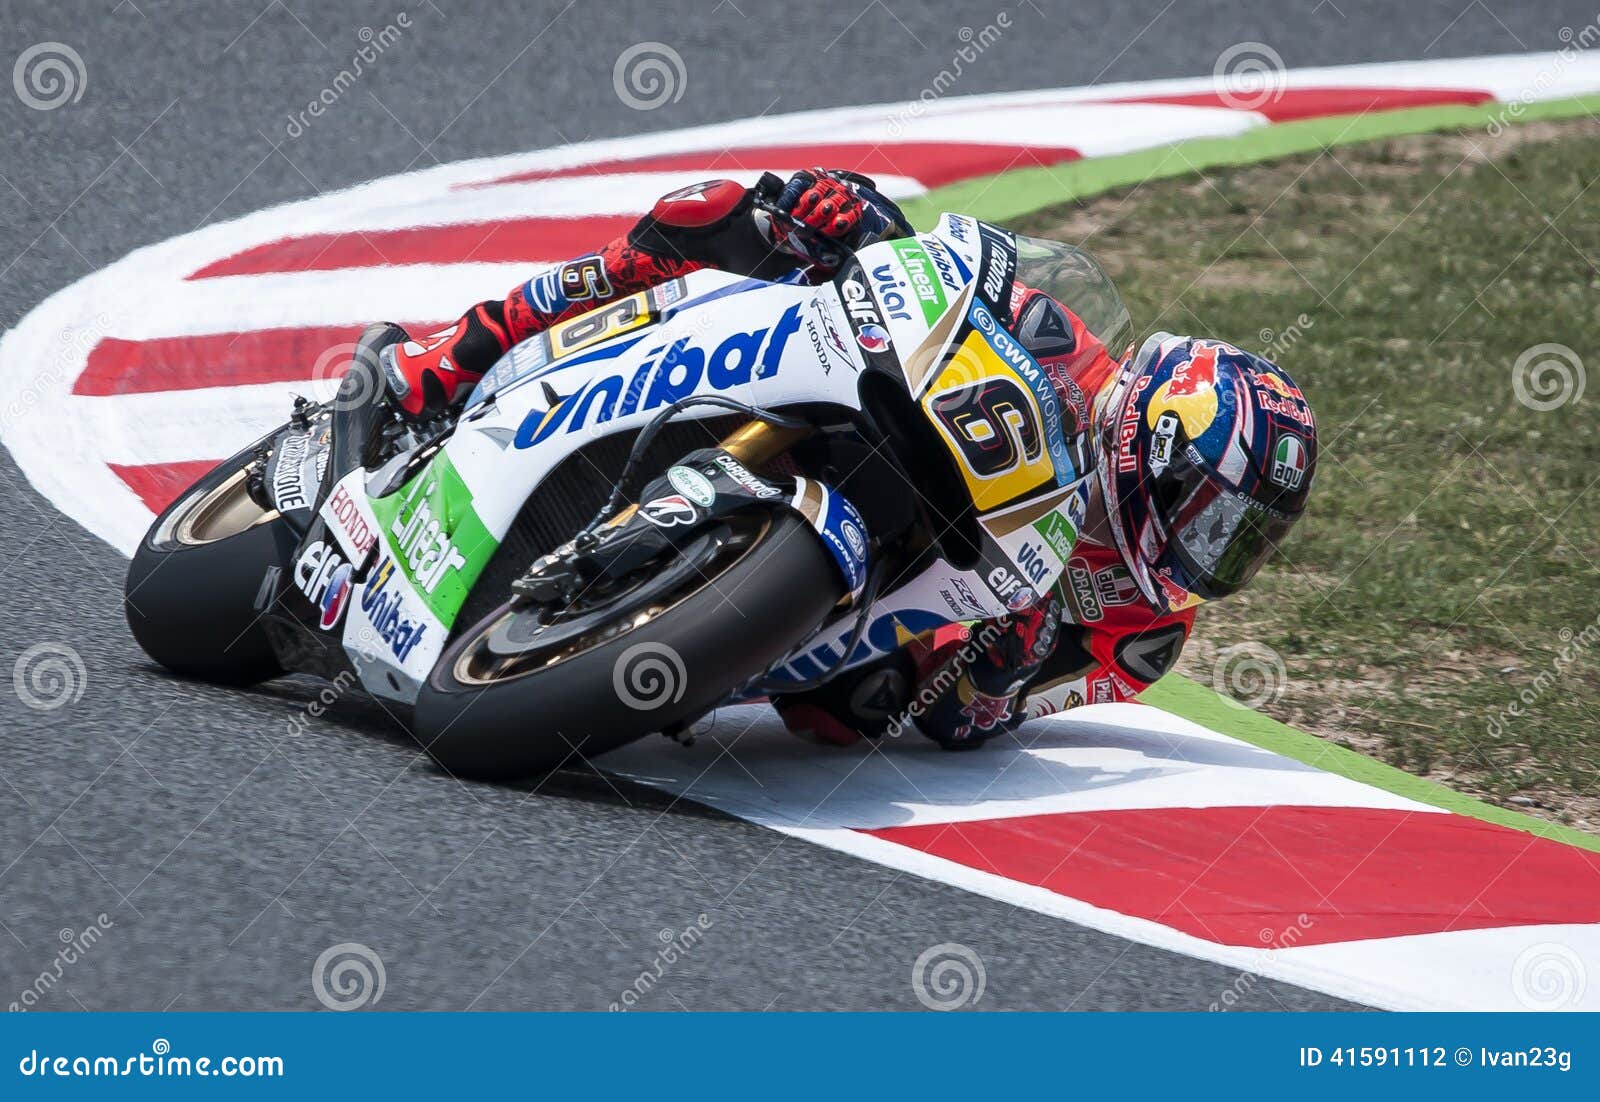 GP CATALUNYA MOTO GP - STEFAN BRADL Editorial Photography - Image of  motorbike, curve: 41591112